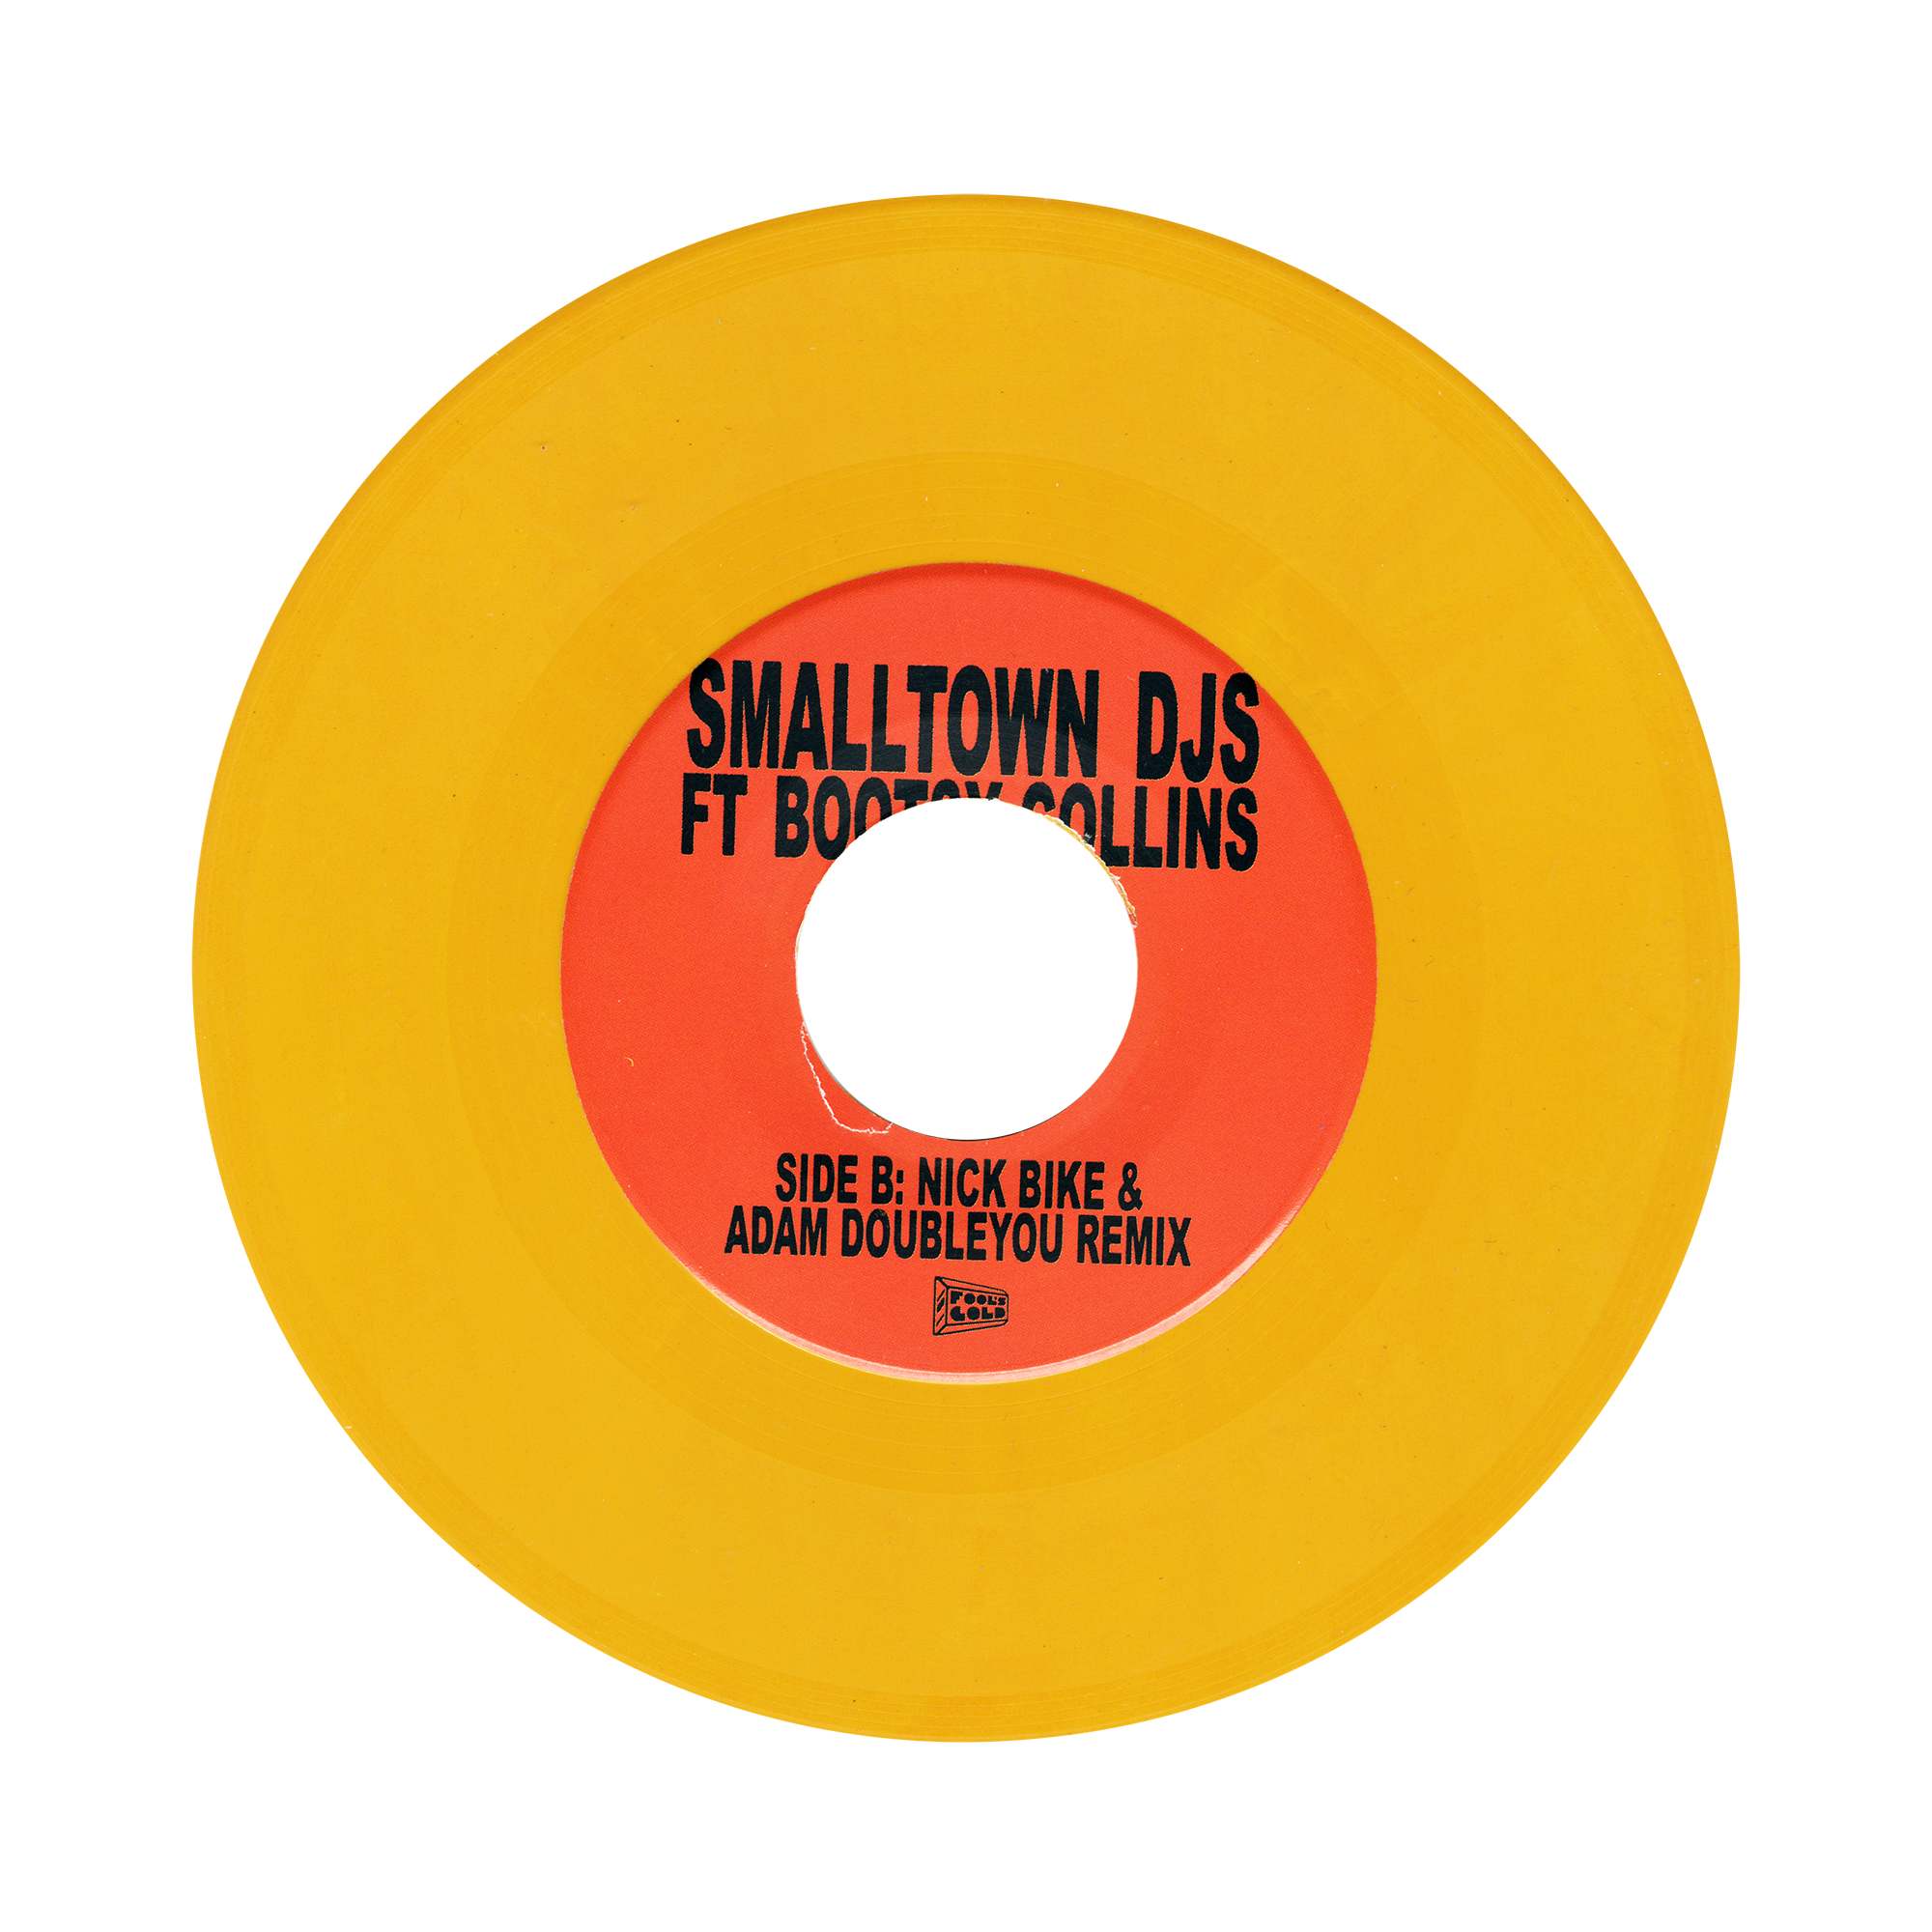 Smalltown DJs feat. Bootsy Collins “Good Thang” Color Vinyl 7"